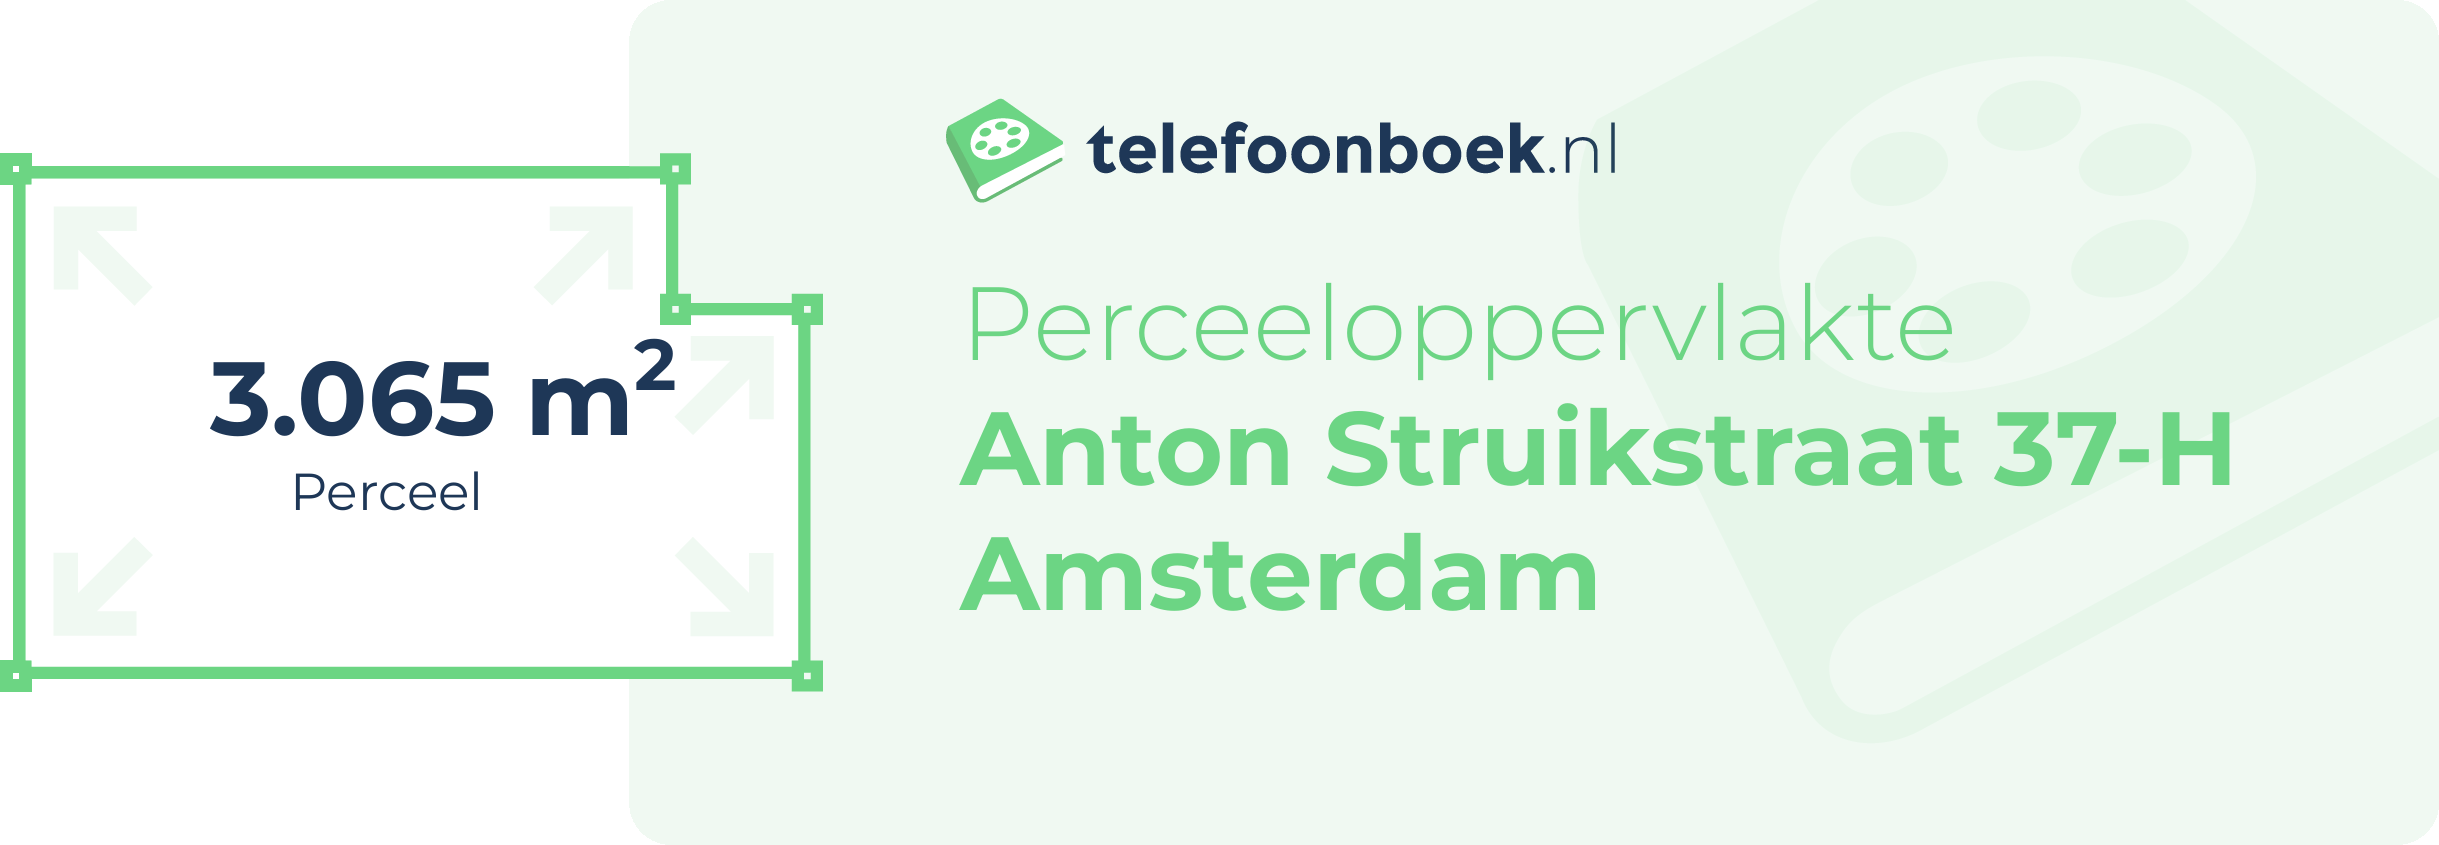 Perceeloppervlakte Anton Struikstraat 37-H Amsterdam